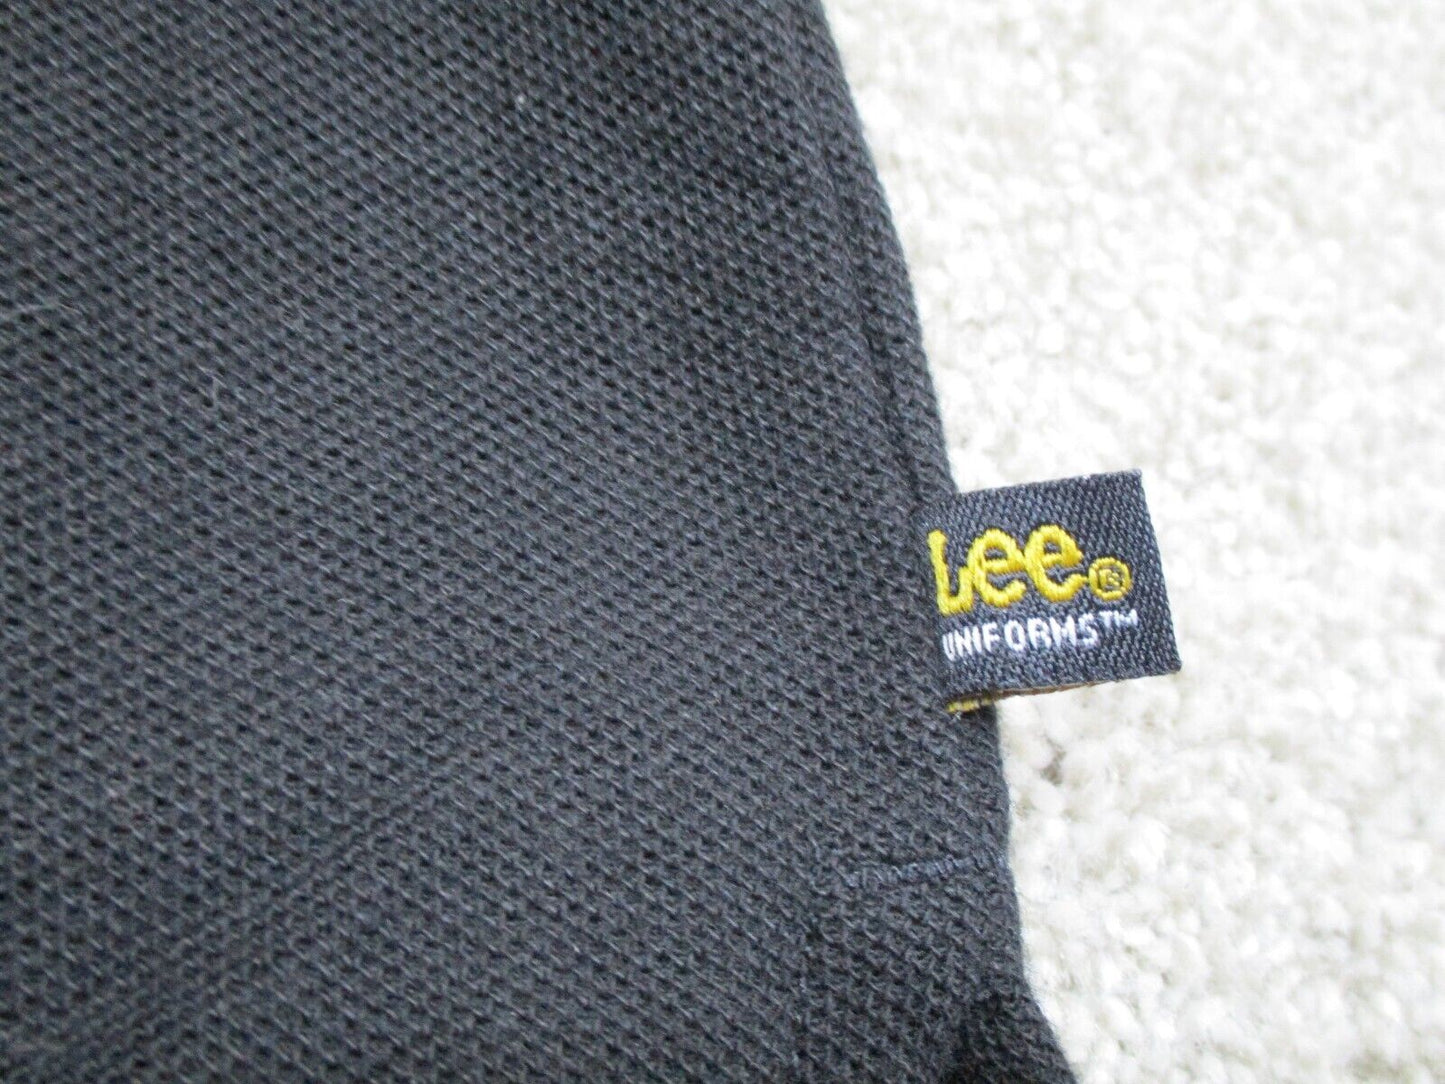 Lee Uniform Golf Polo Shirt Men's X-Large Black Short Sleeves Collared Neck